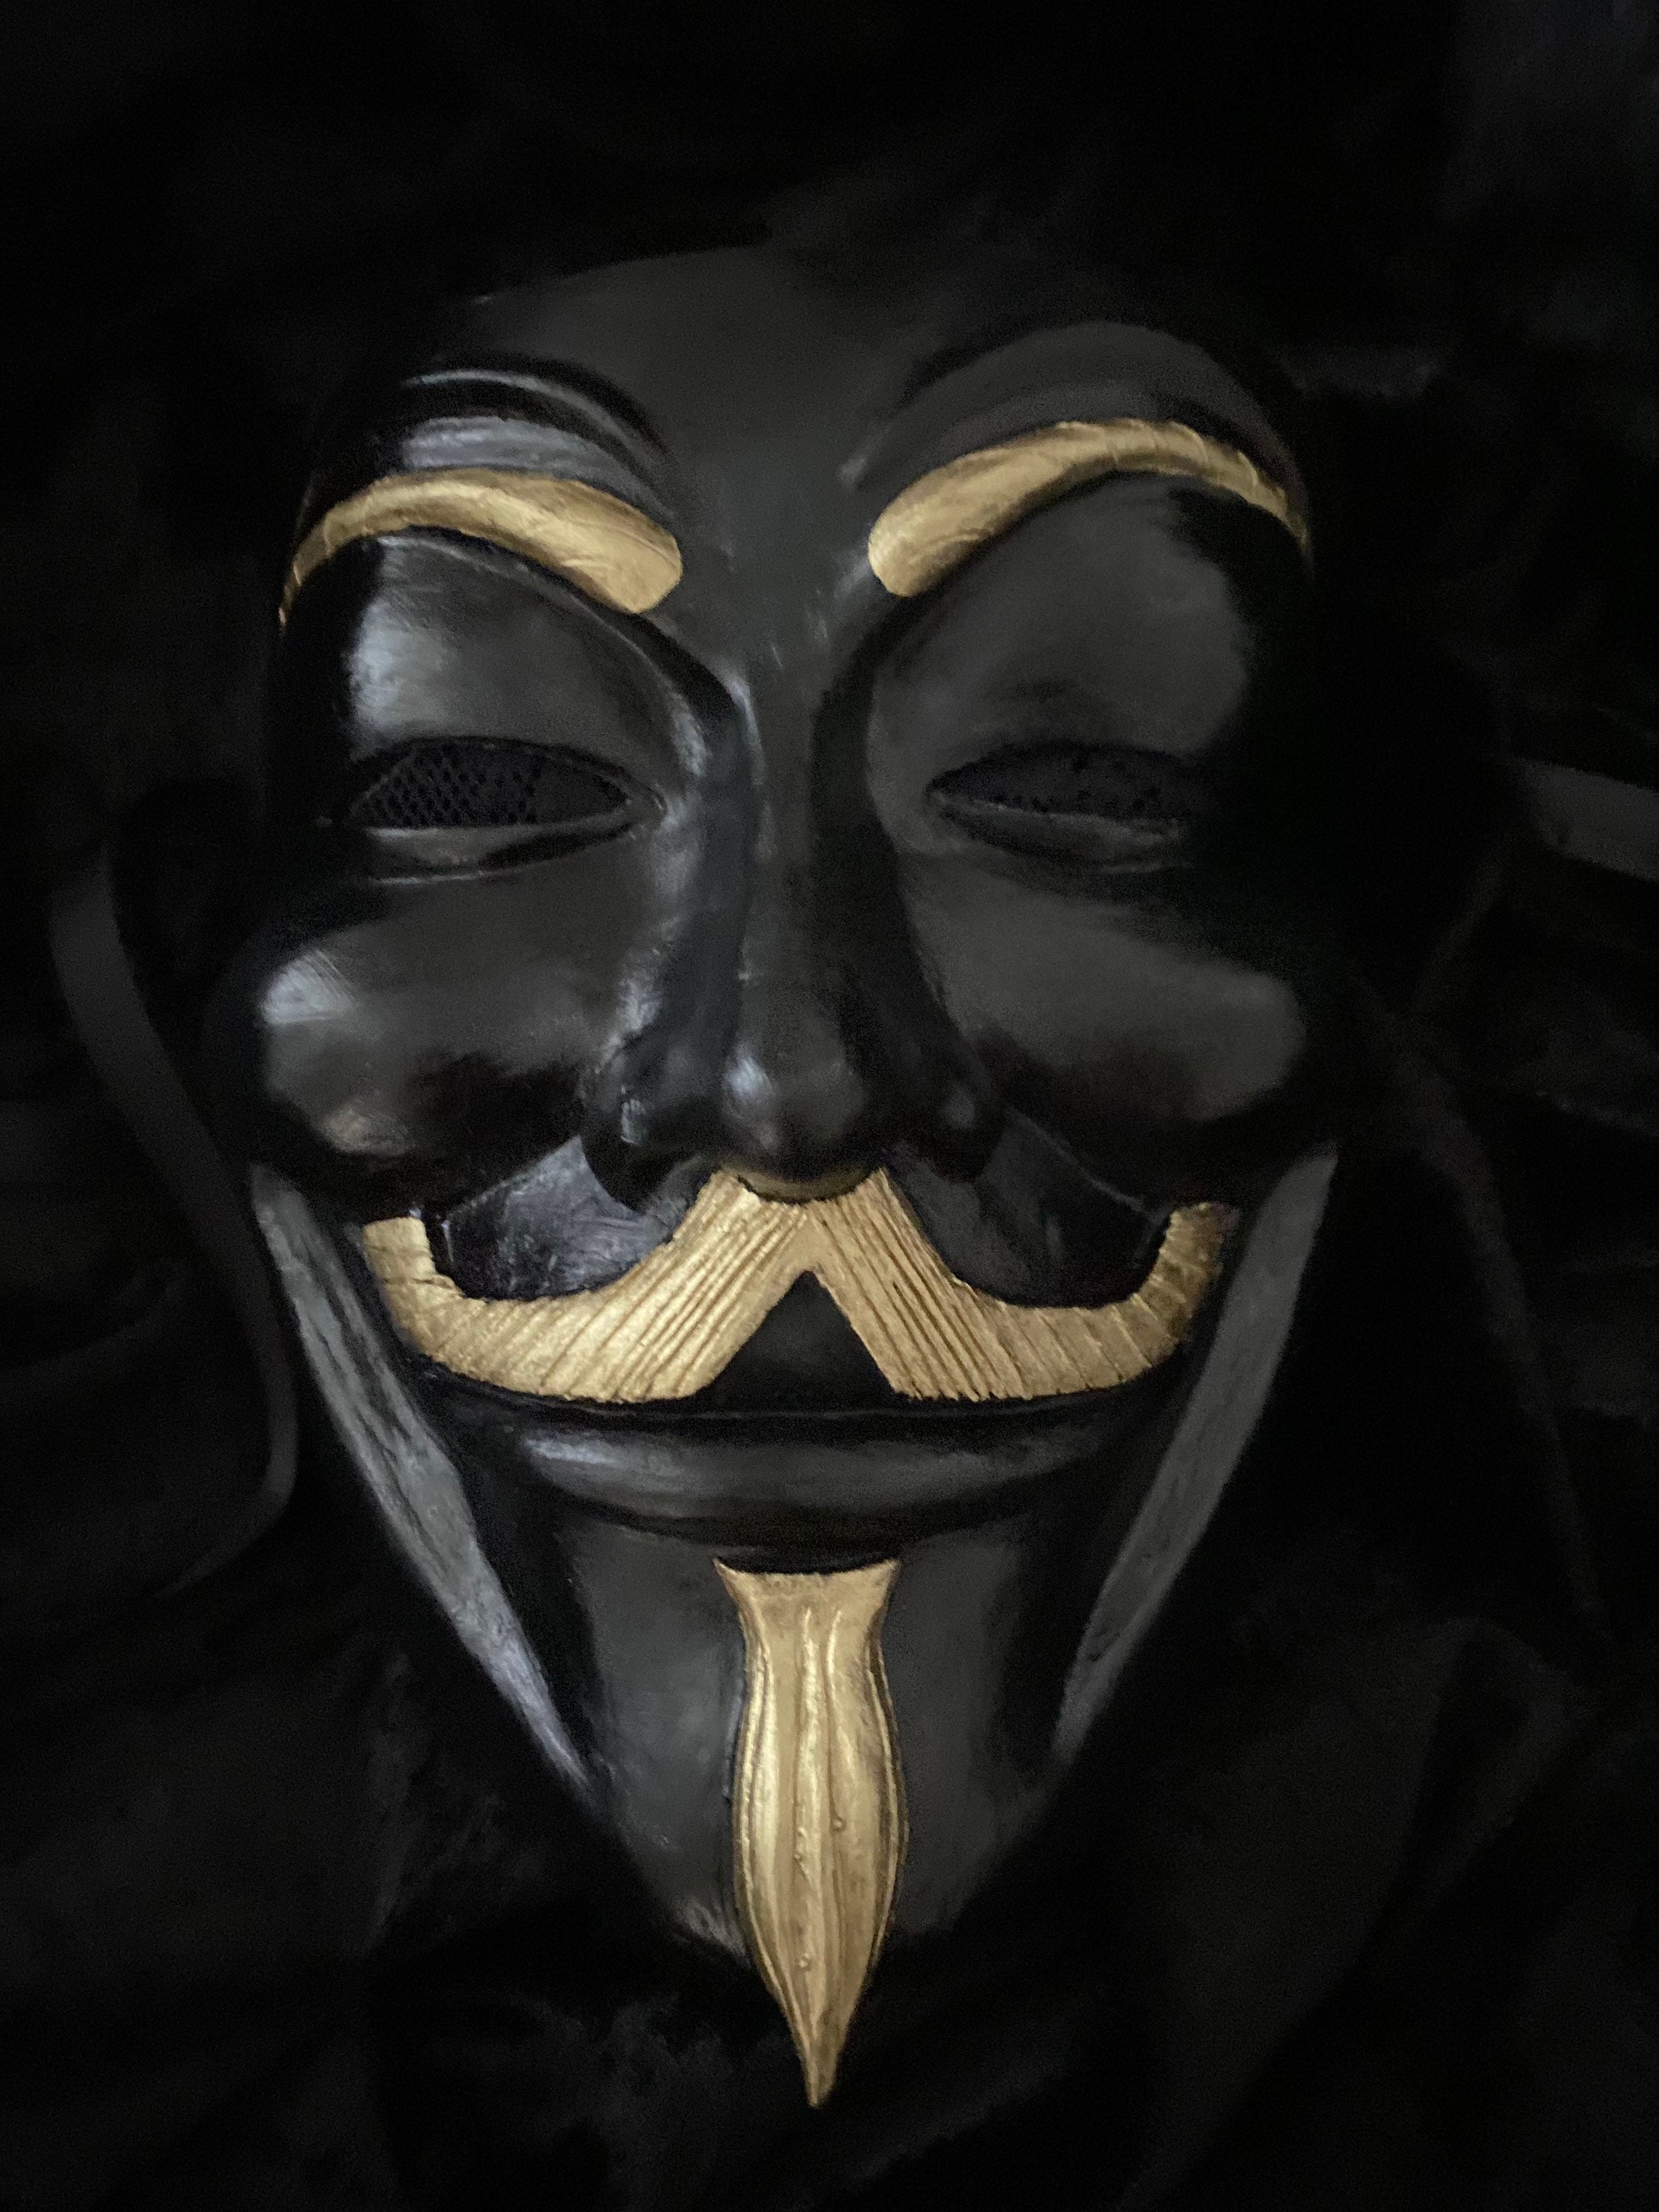 V for Vendetta mask: Bonfire Night origins to Anonymous symbol